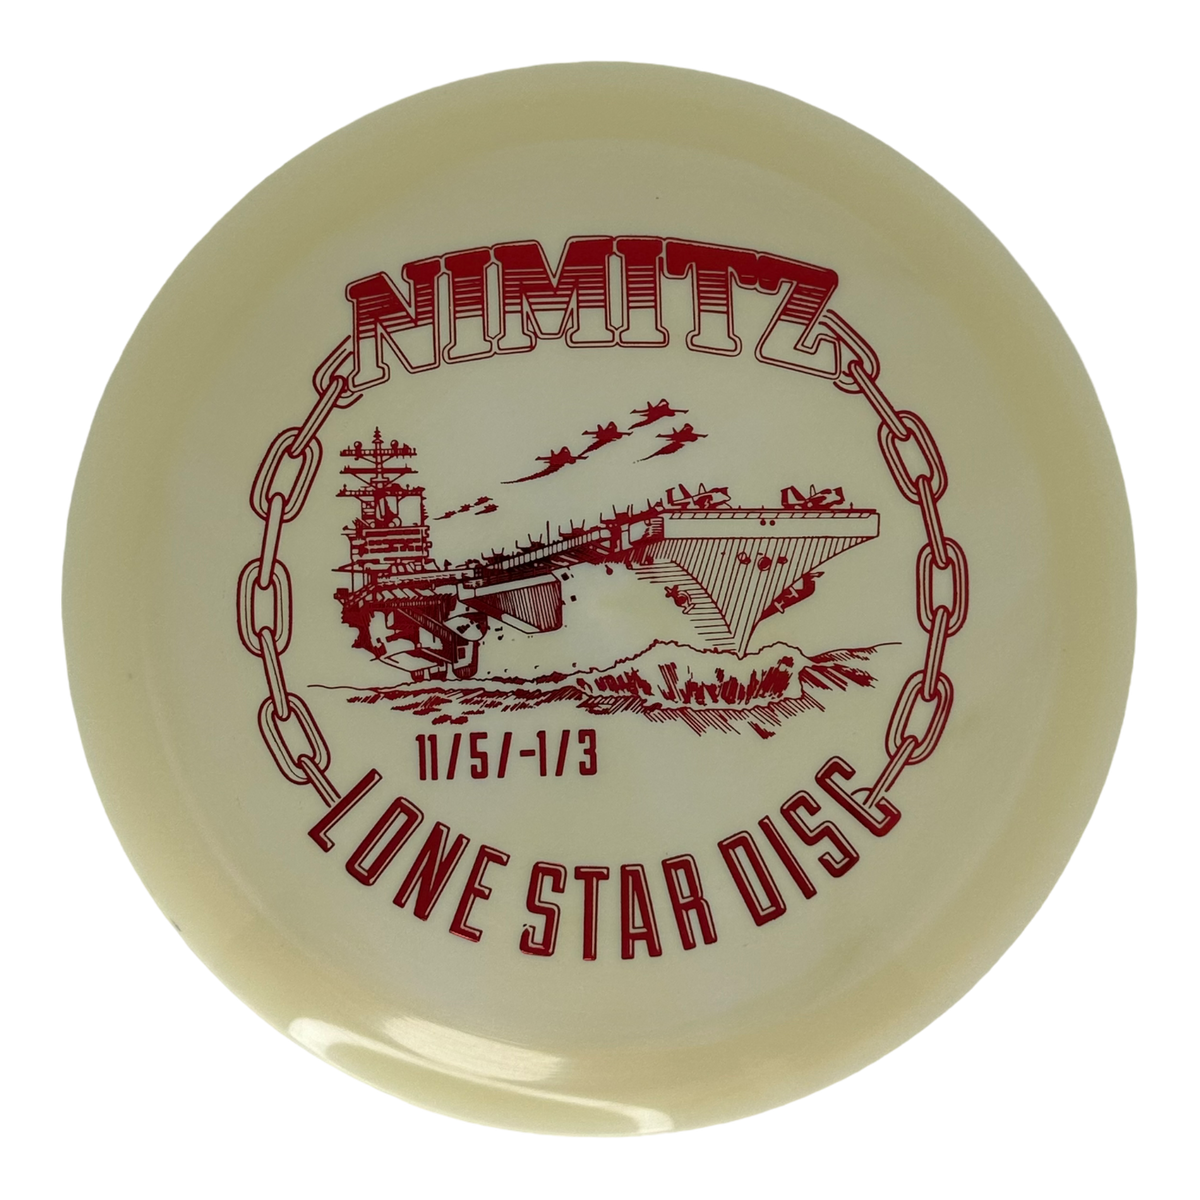 Lone Star Disc Bravo Nimitz